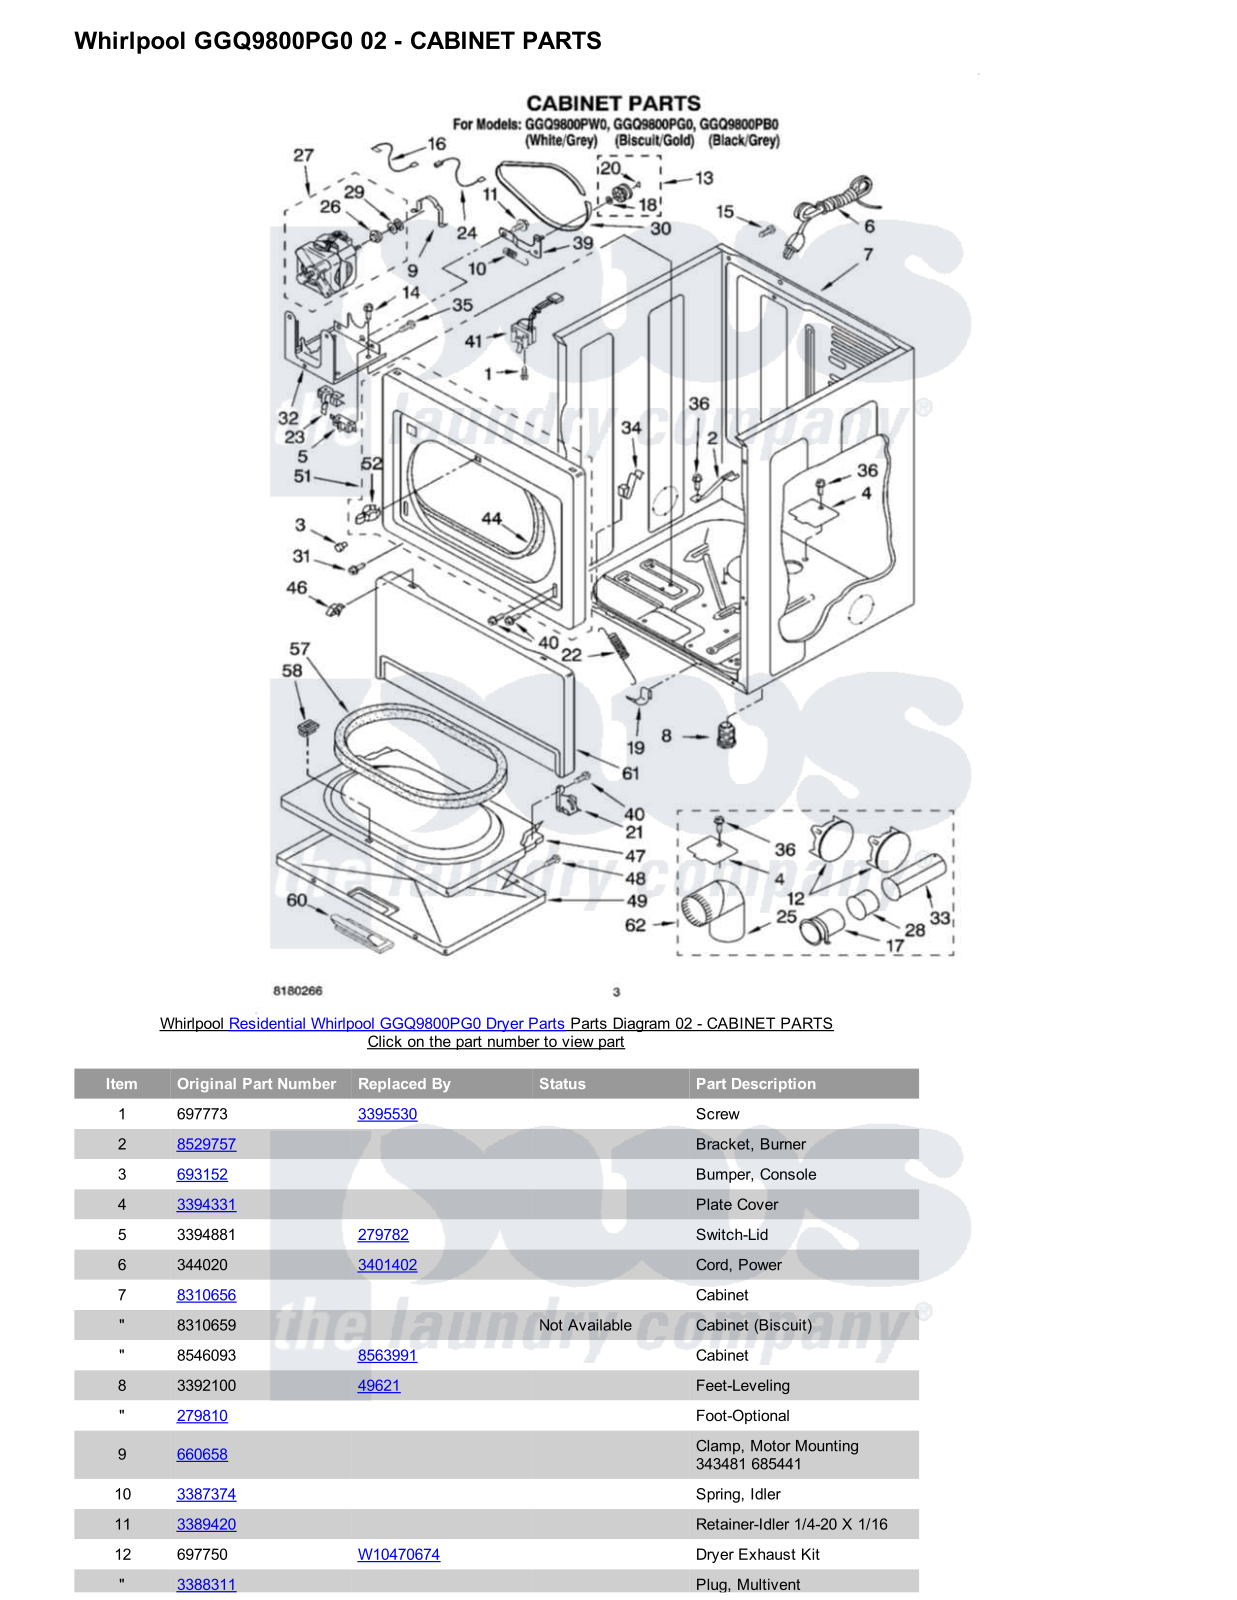 Whirlpool GGQ9800PG0 Parts Diagram